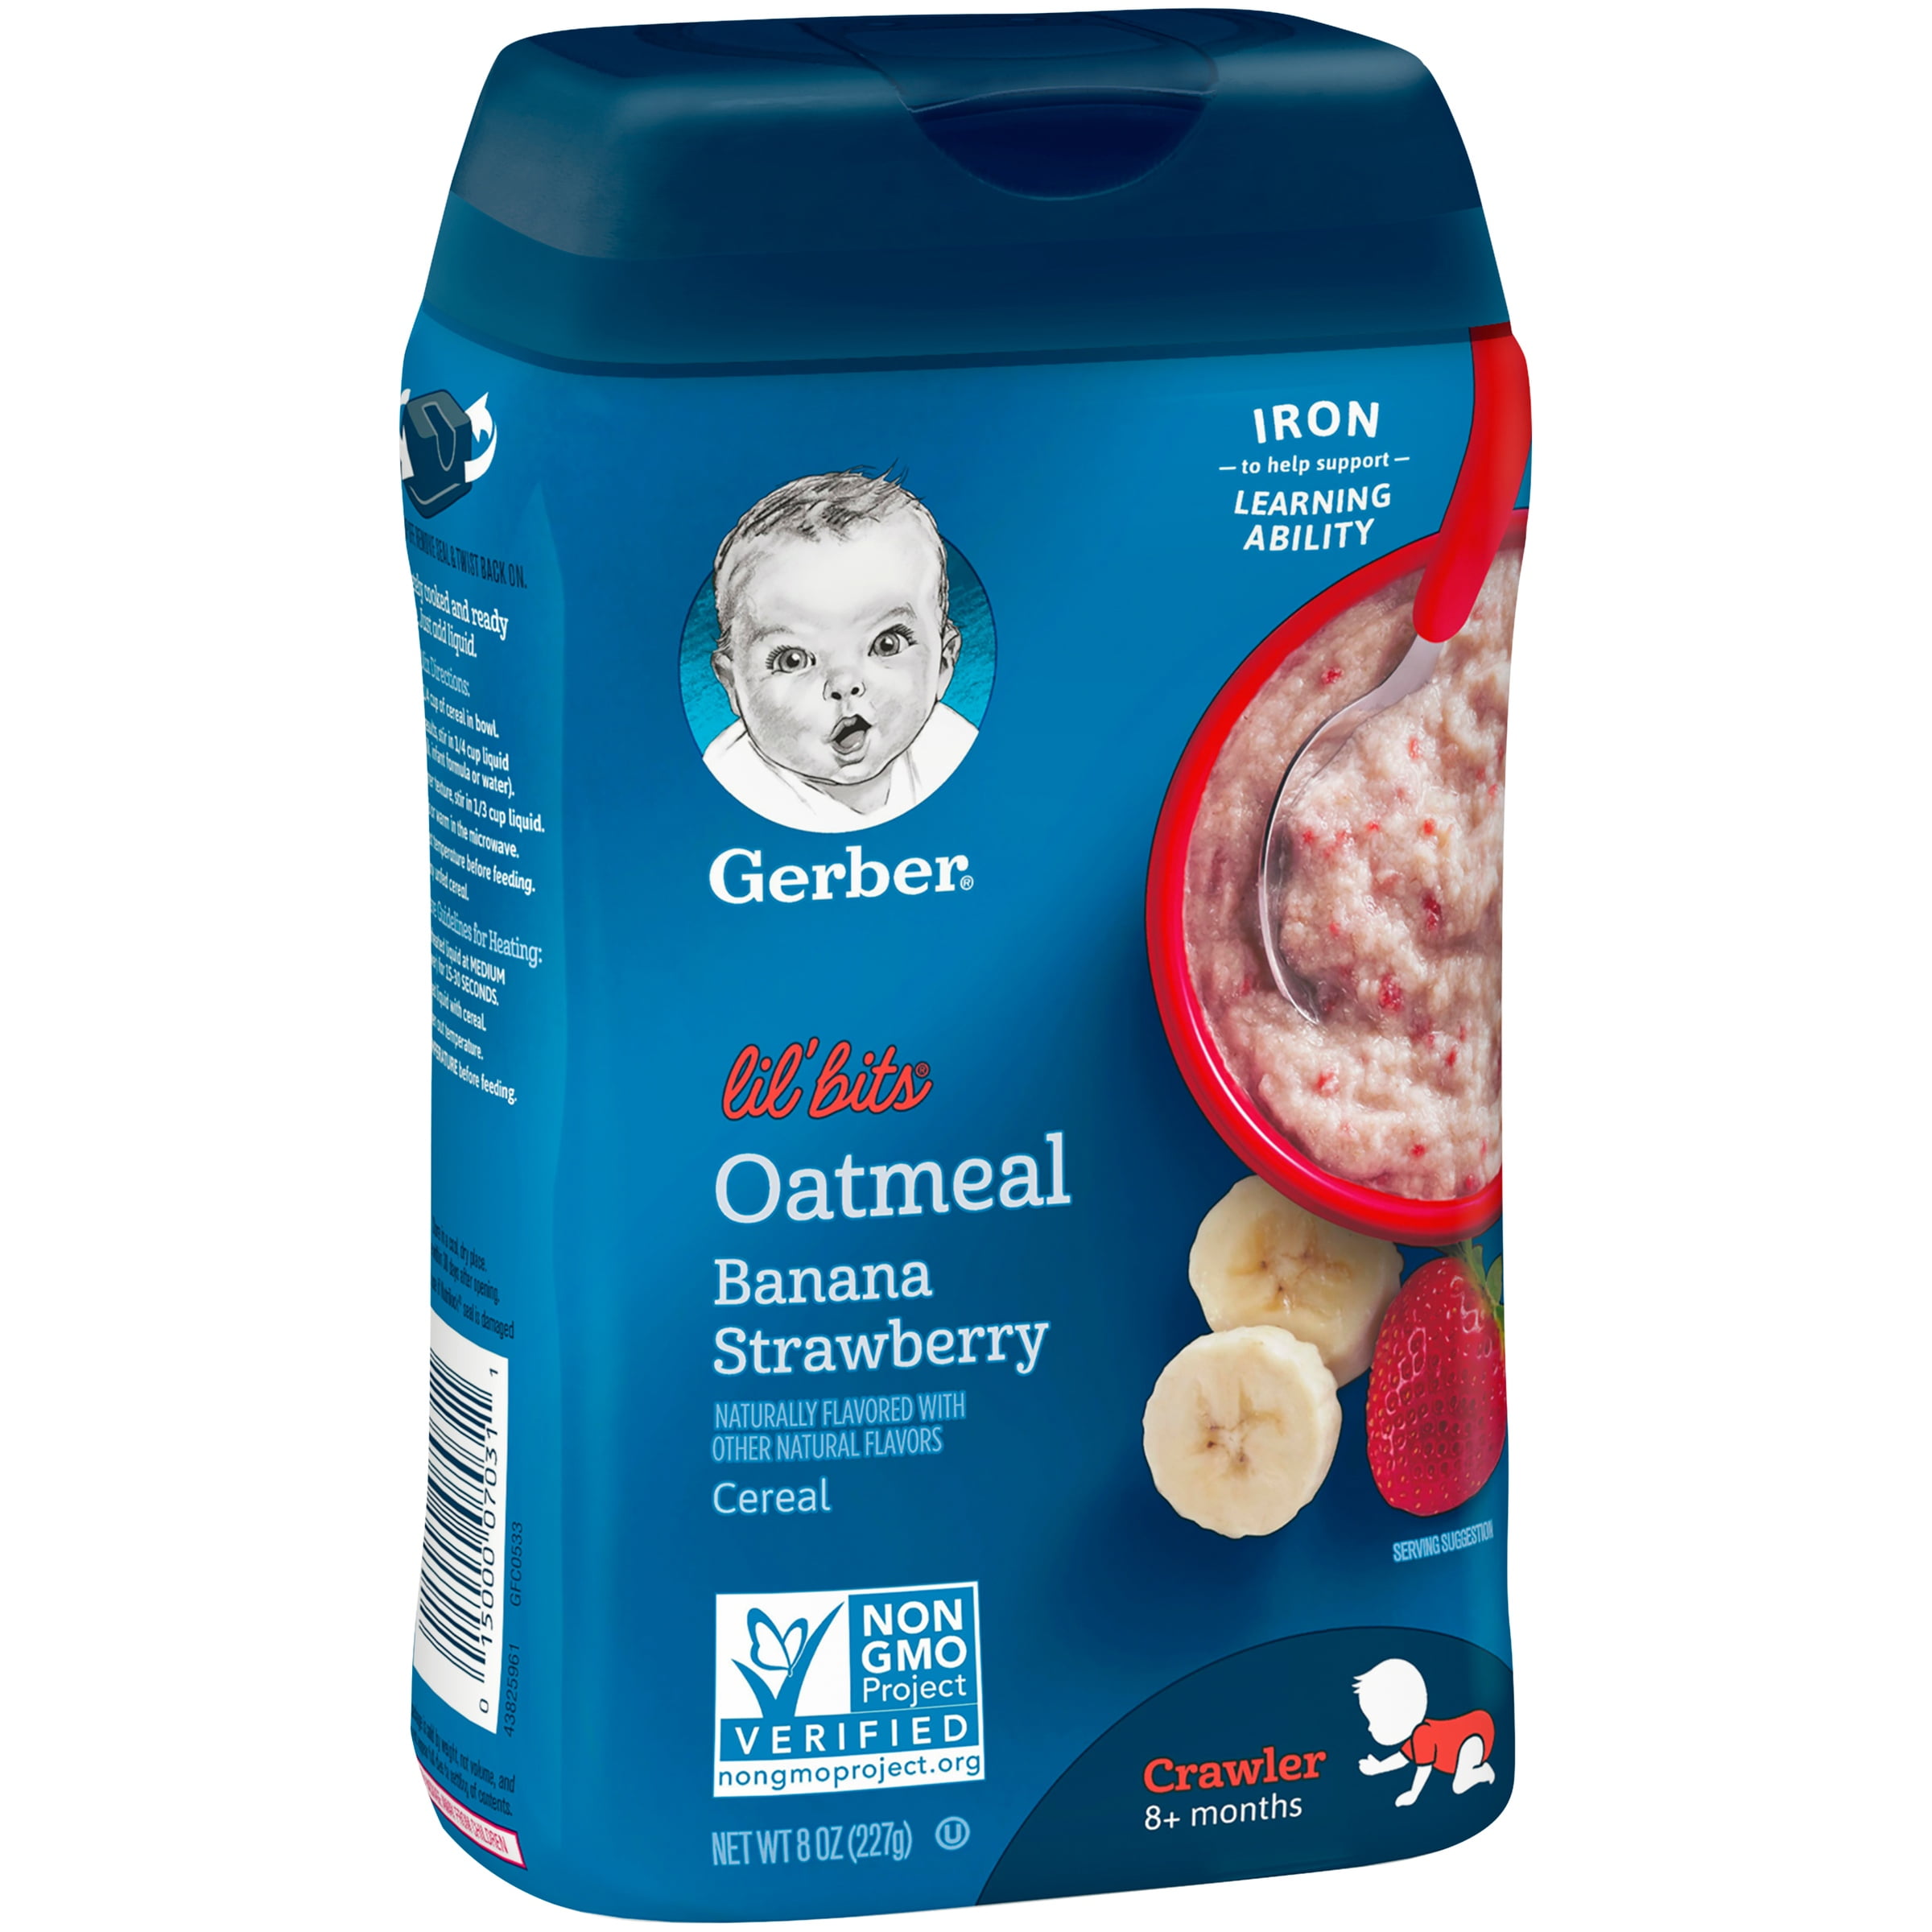 gerber oatmeal and banana cereal